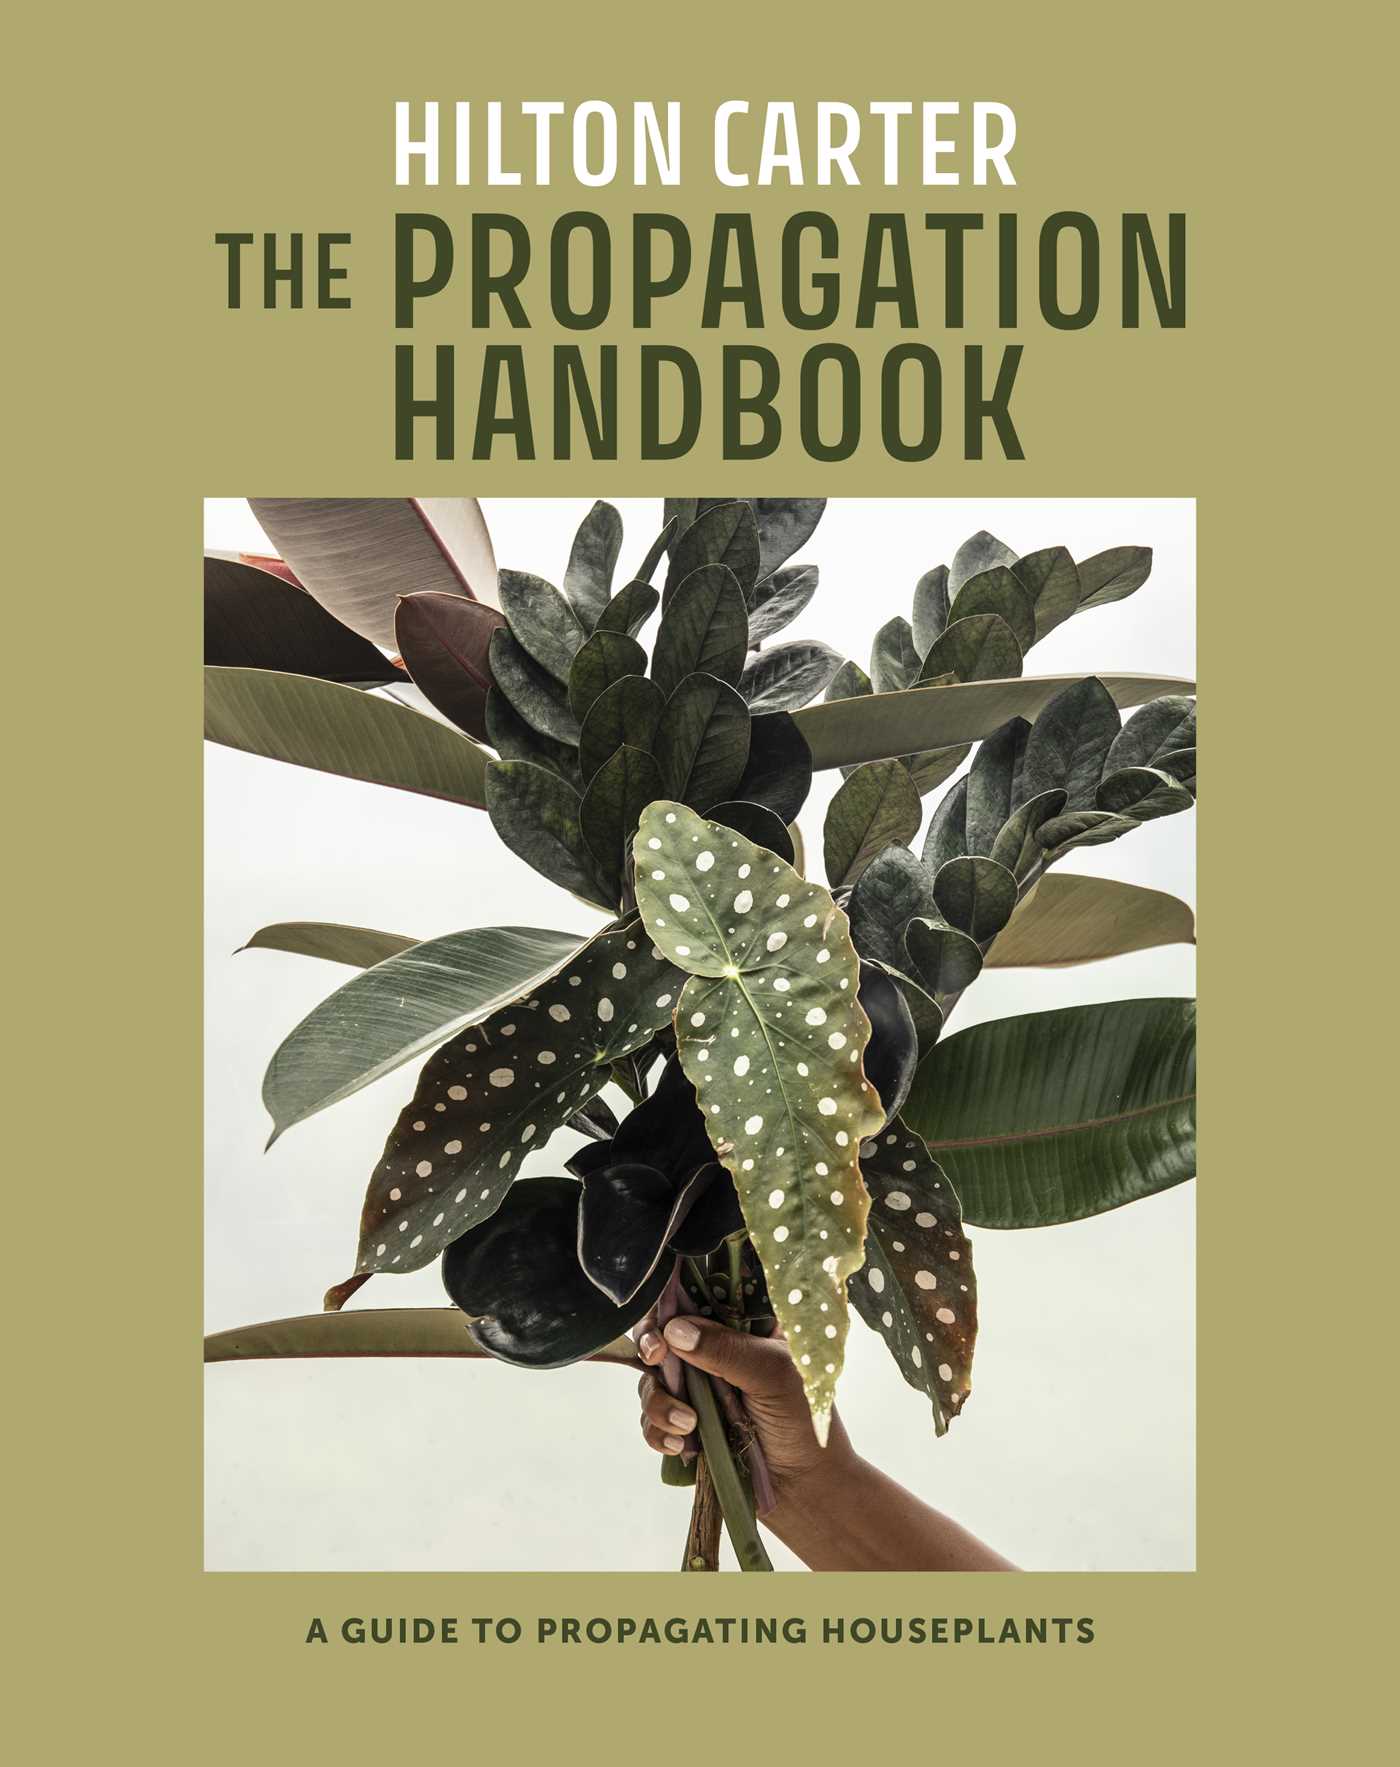 The Propagation Handbook // A Guide to Propagating Houseplants